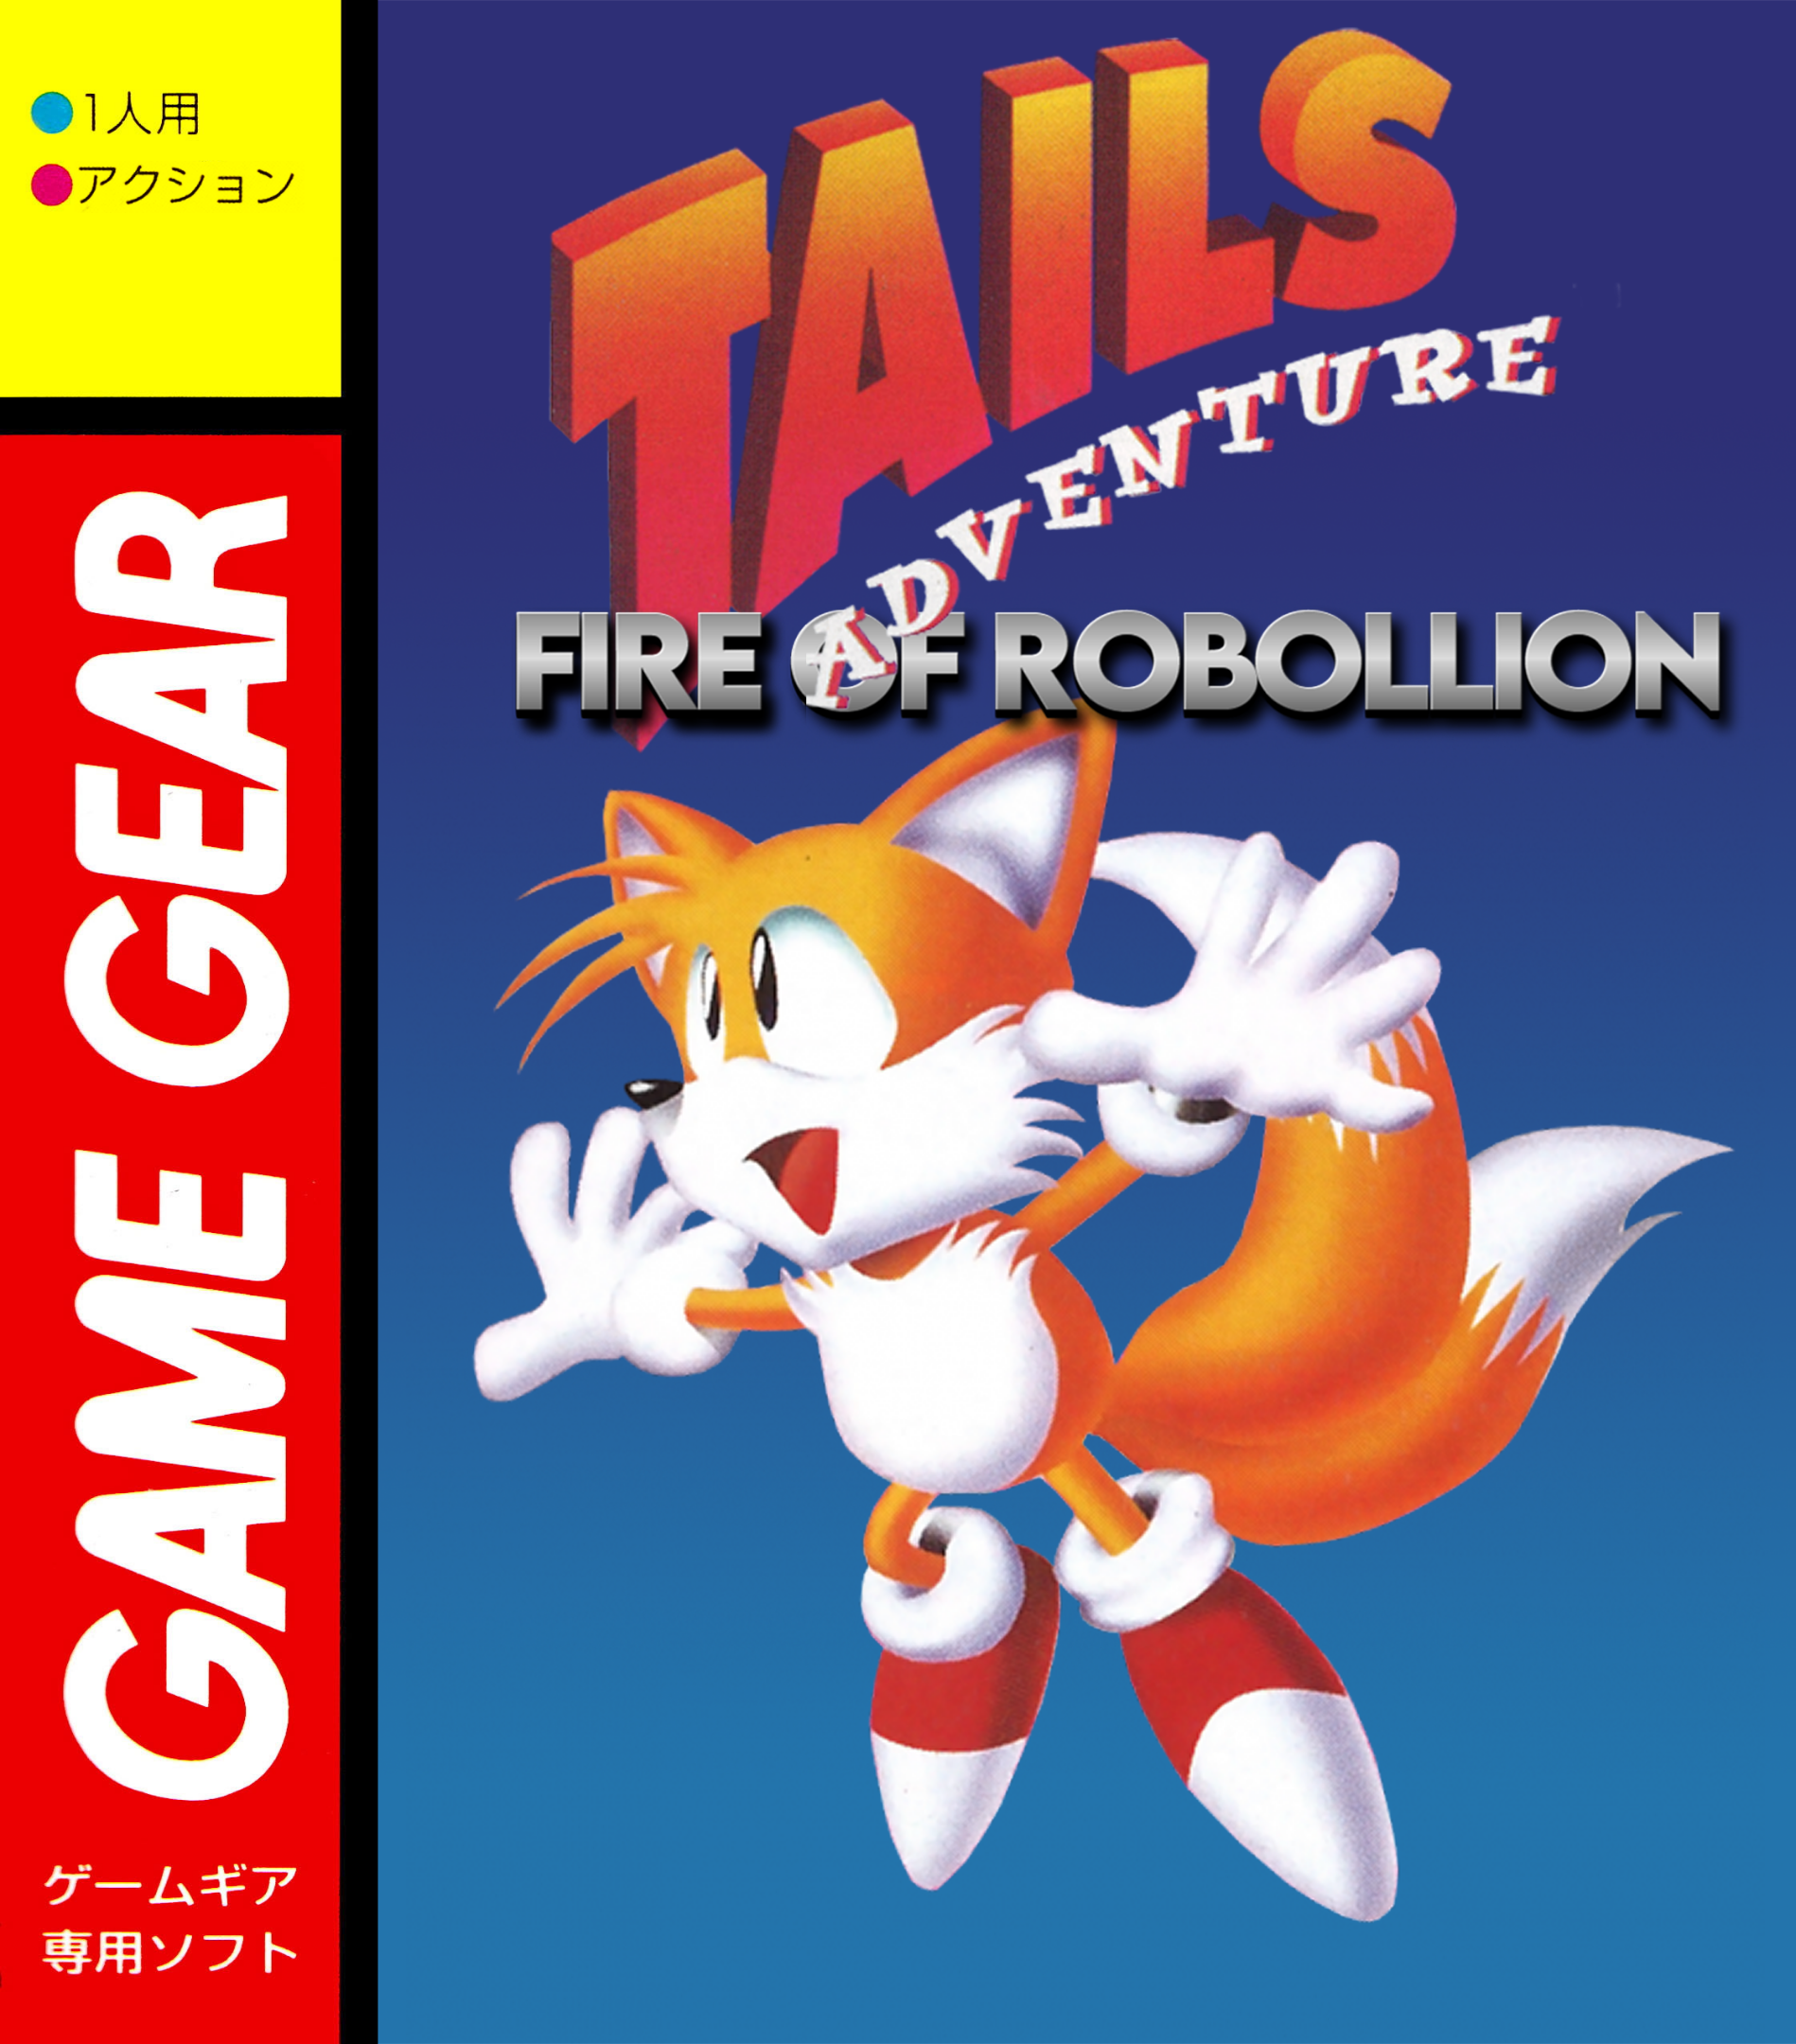 Tails Adventure Fire of Robollion